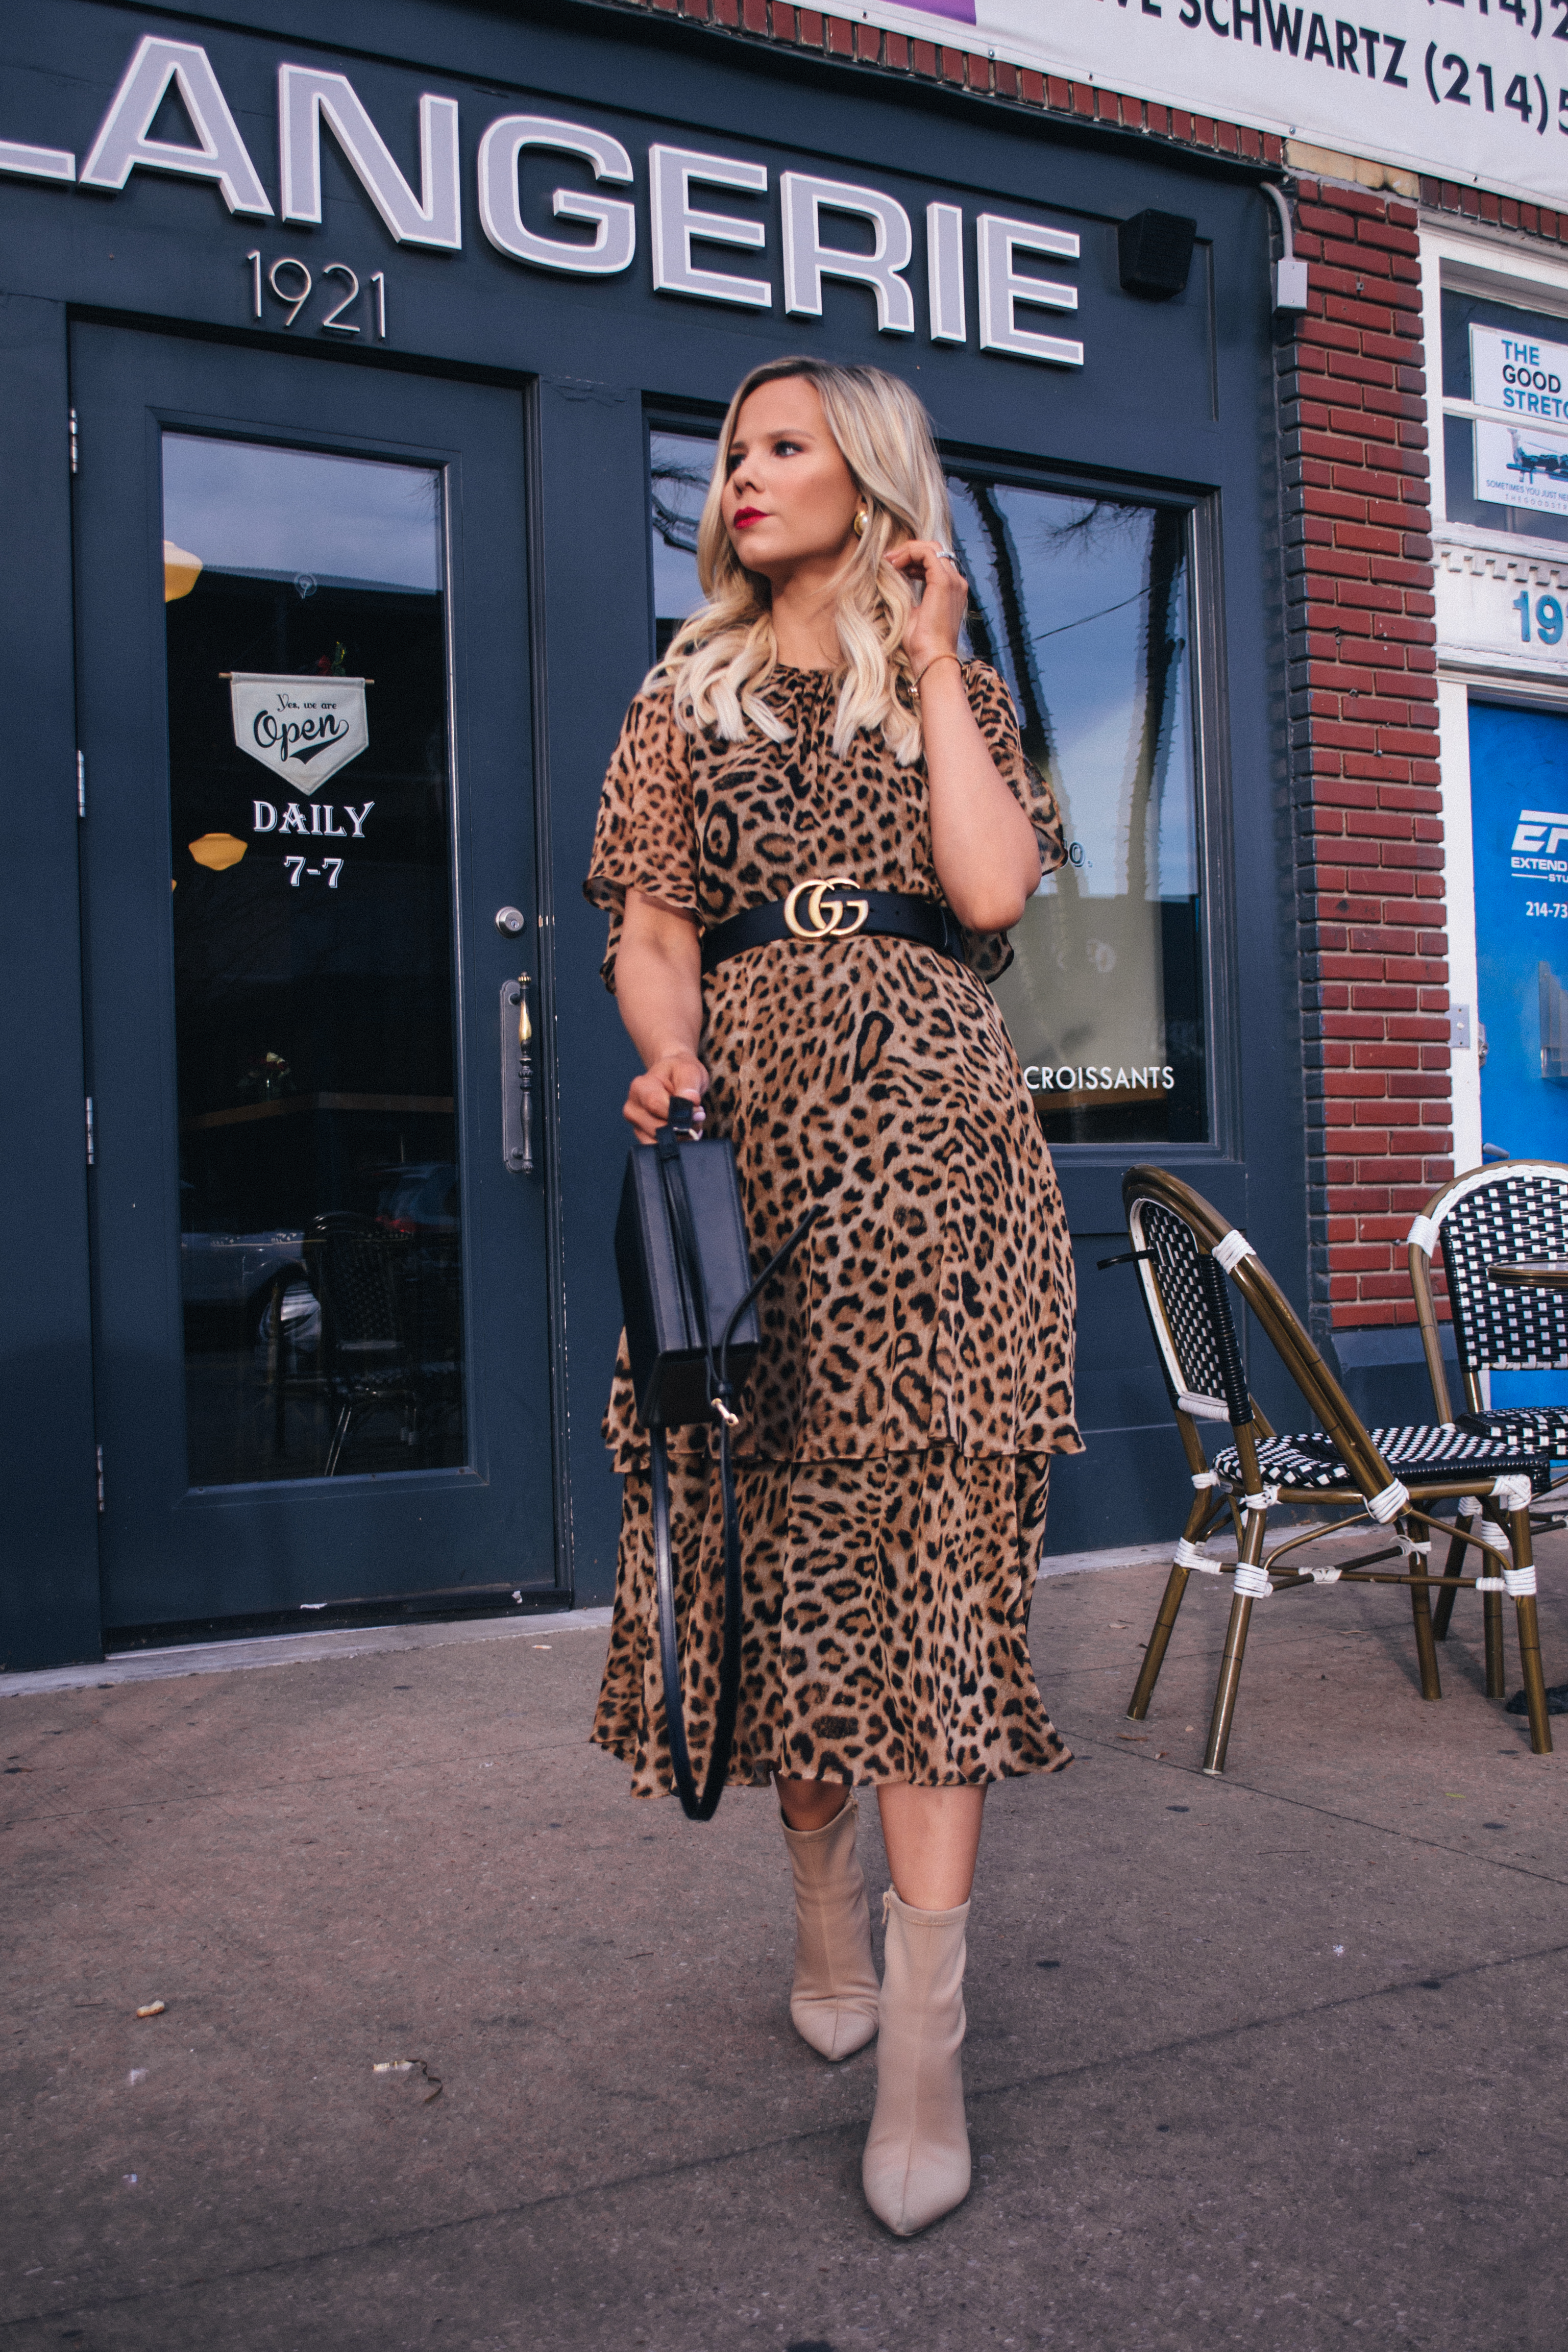 Leopard dress with Gucci Belt, dallas blogger, leopard fashion, leopard style #leopard #fashion #blogger